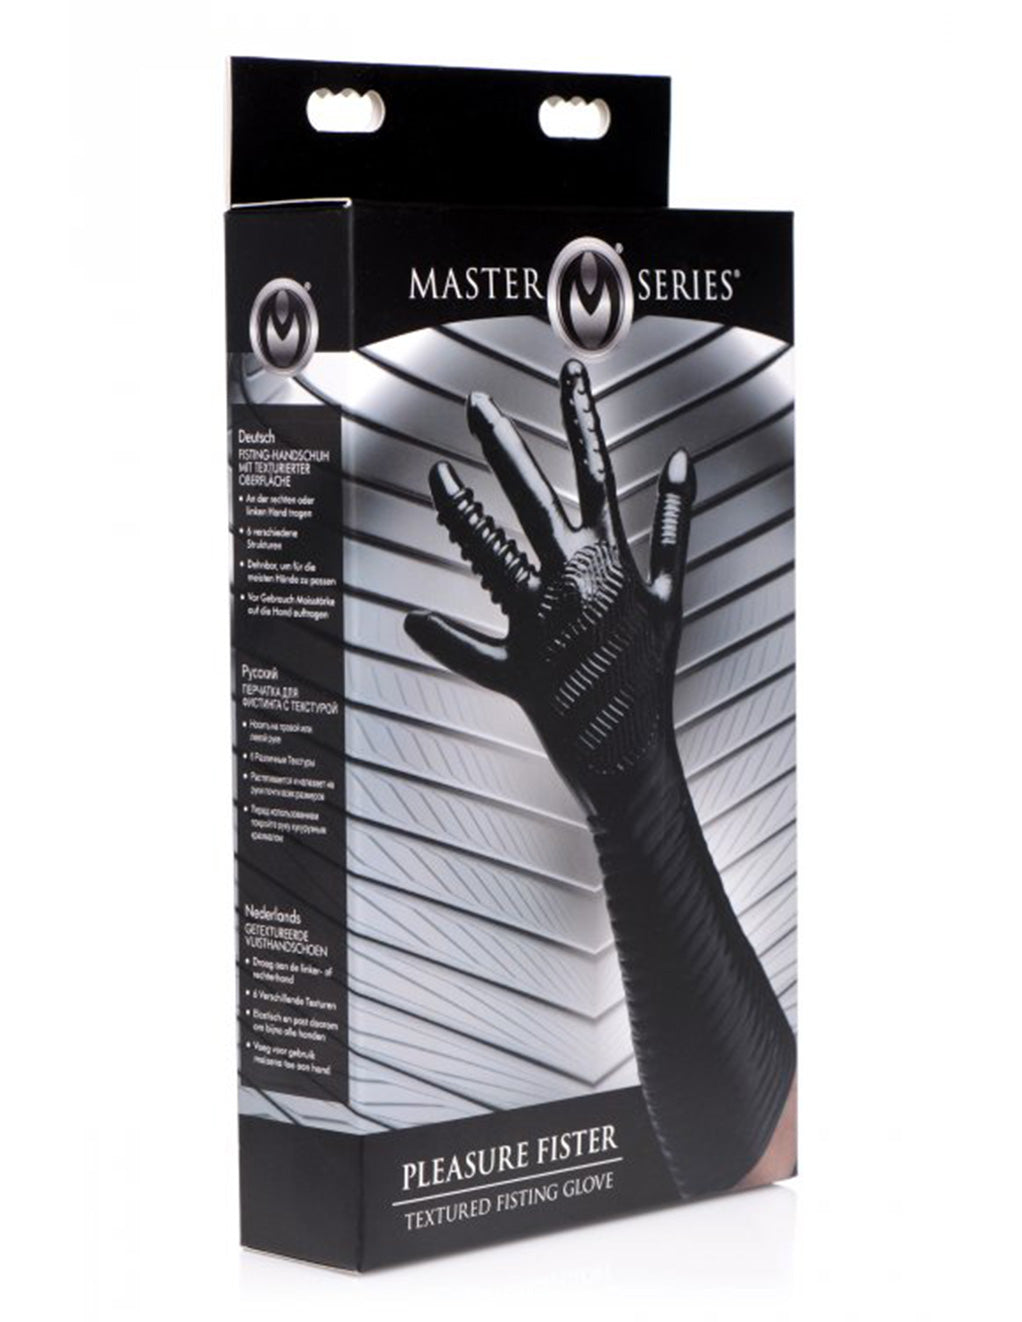 Master Series Pleasure Fister Textured Fisting Glove- Box